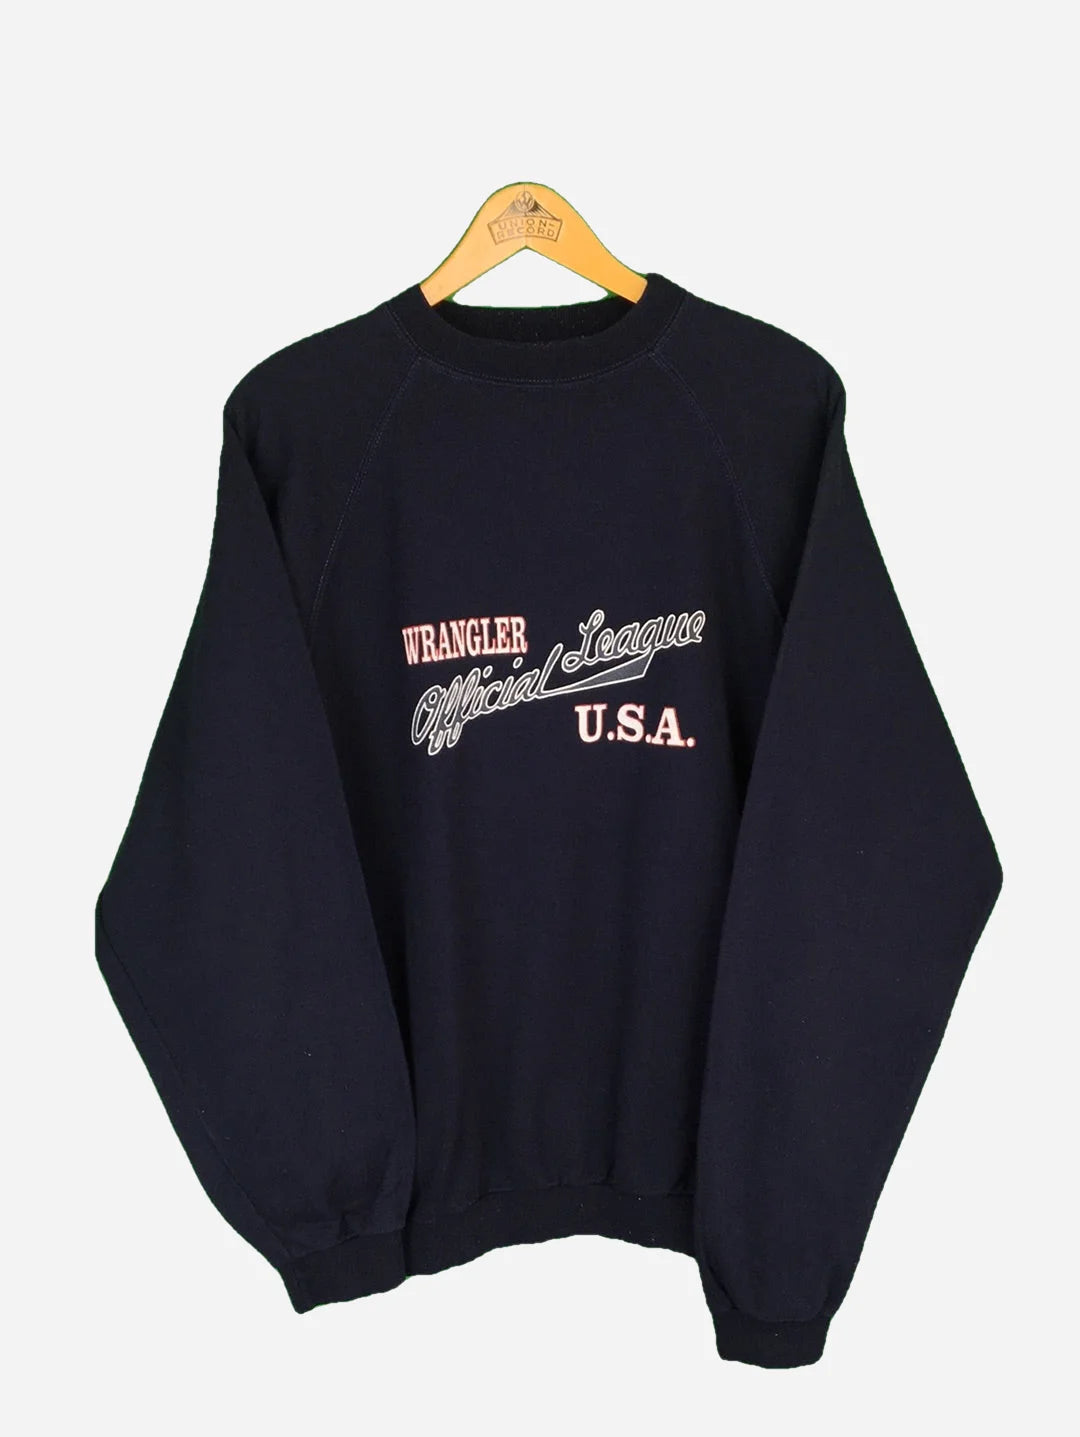 Wrangler U.S.A Sweater (L)